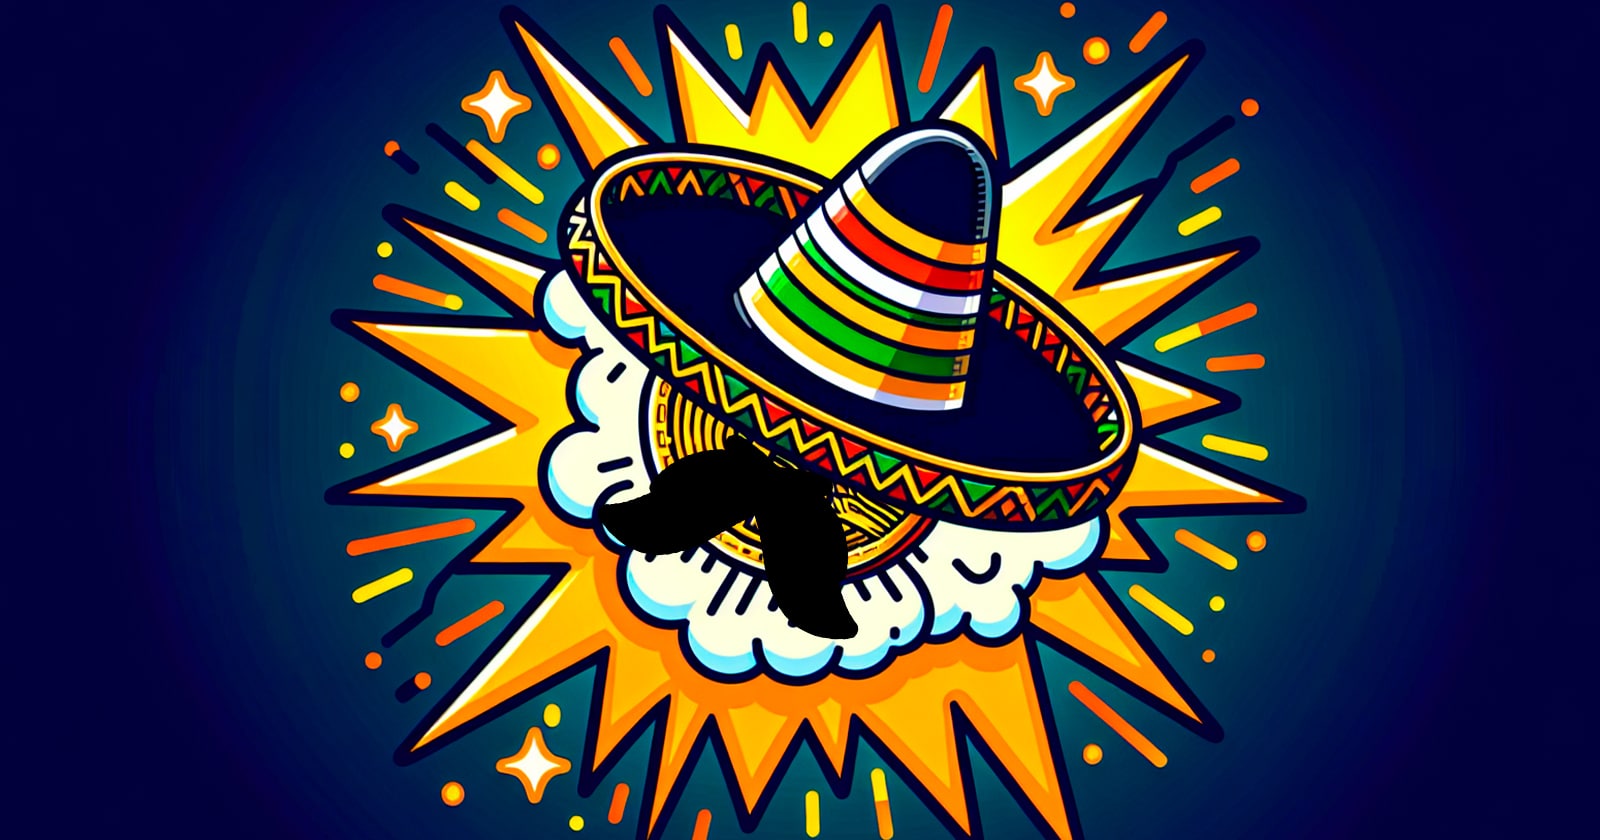 memecoin-chapeu-mexicano-explode